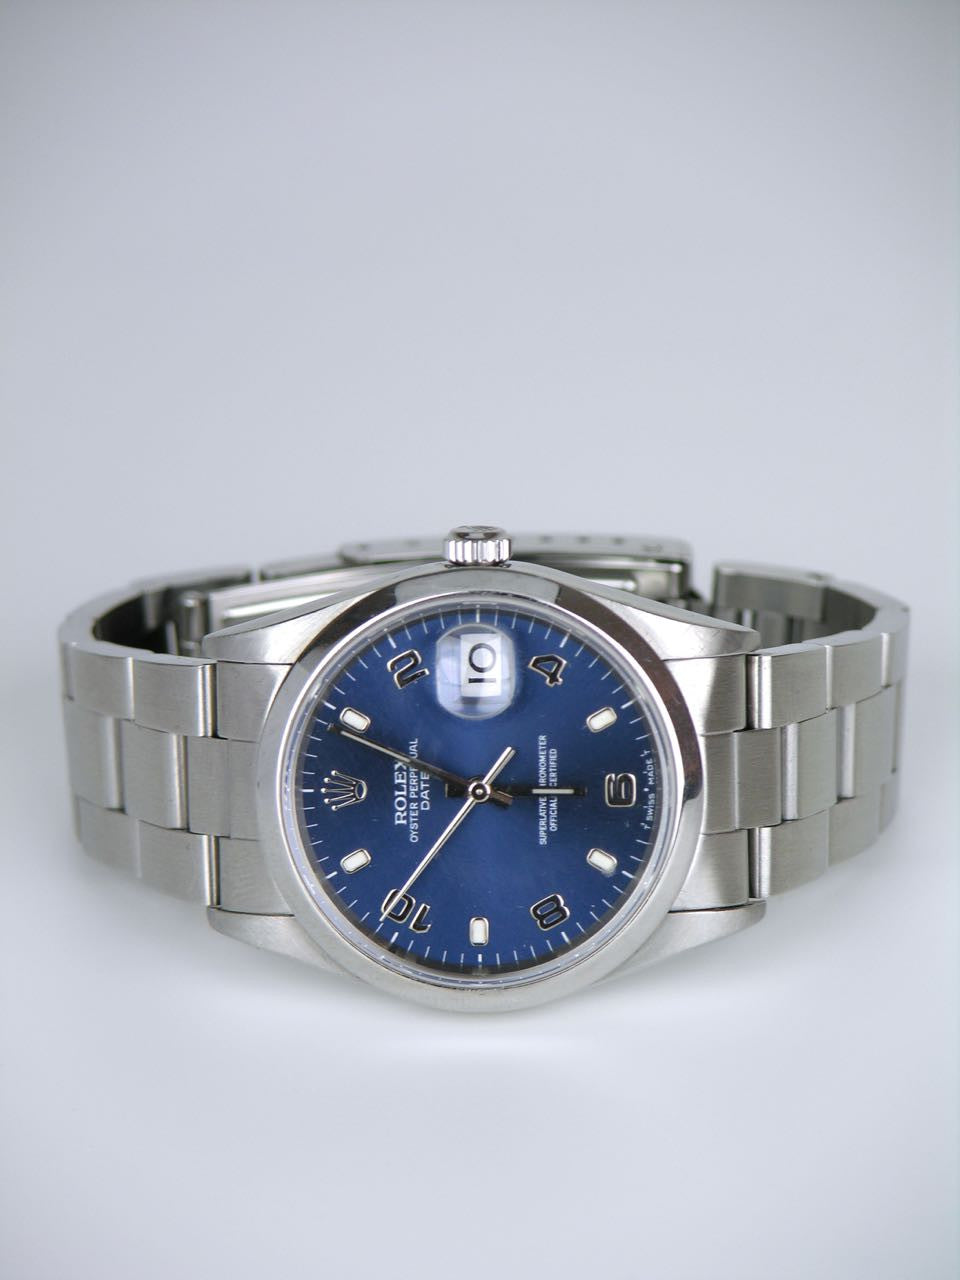 Rolex Oyster Perpetual Date Wristwatch - Ref 15200